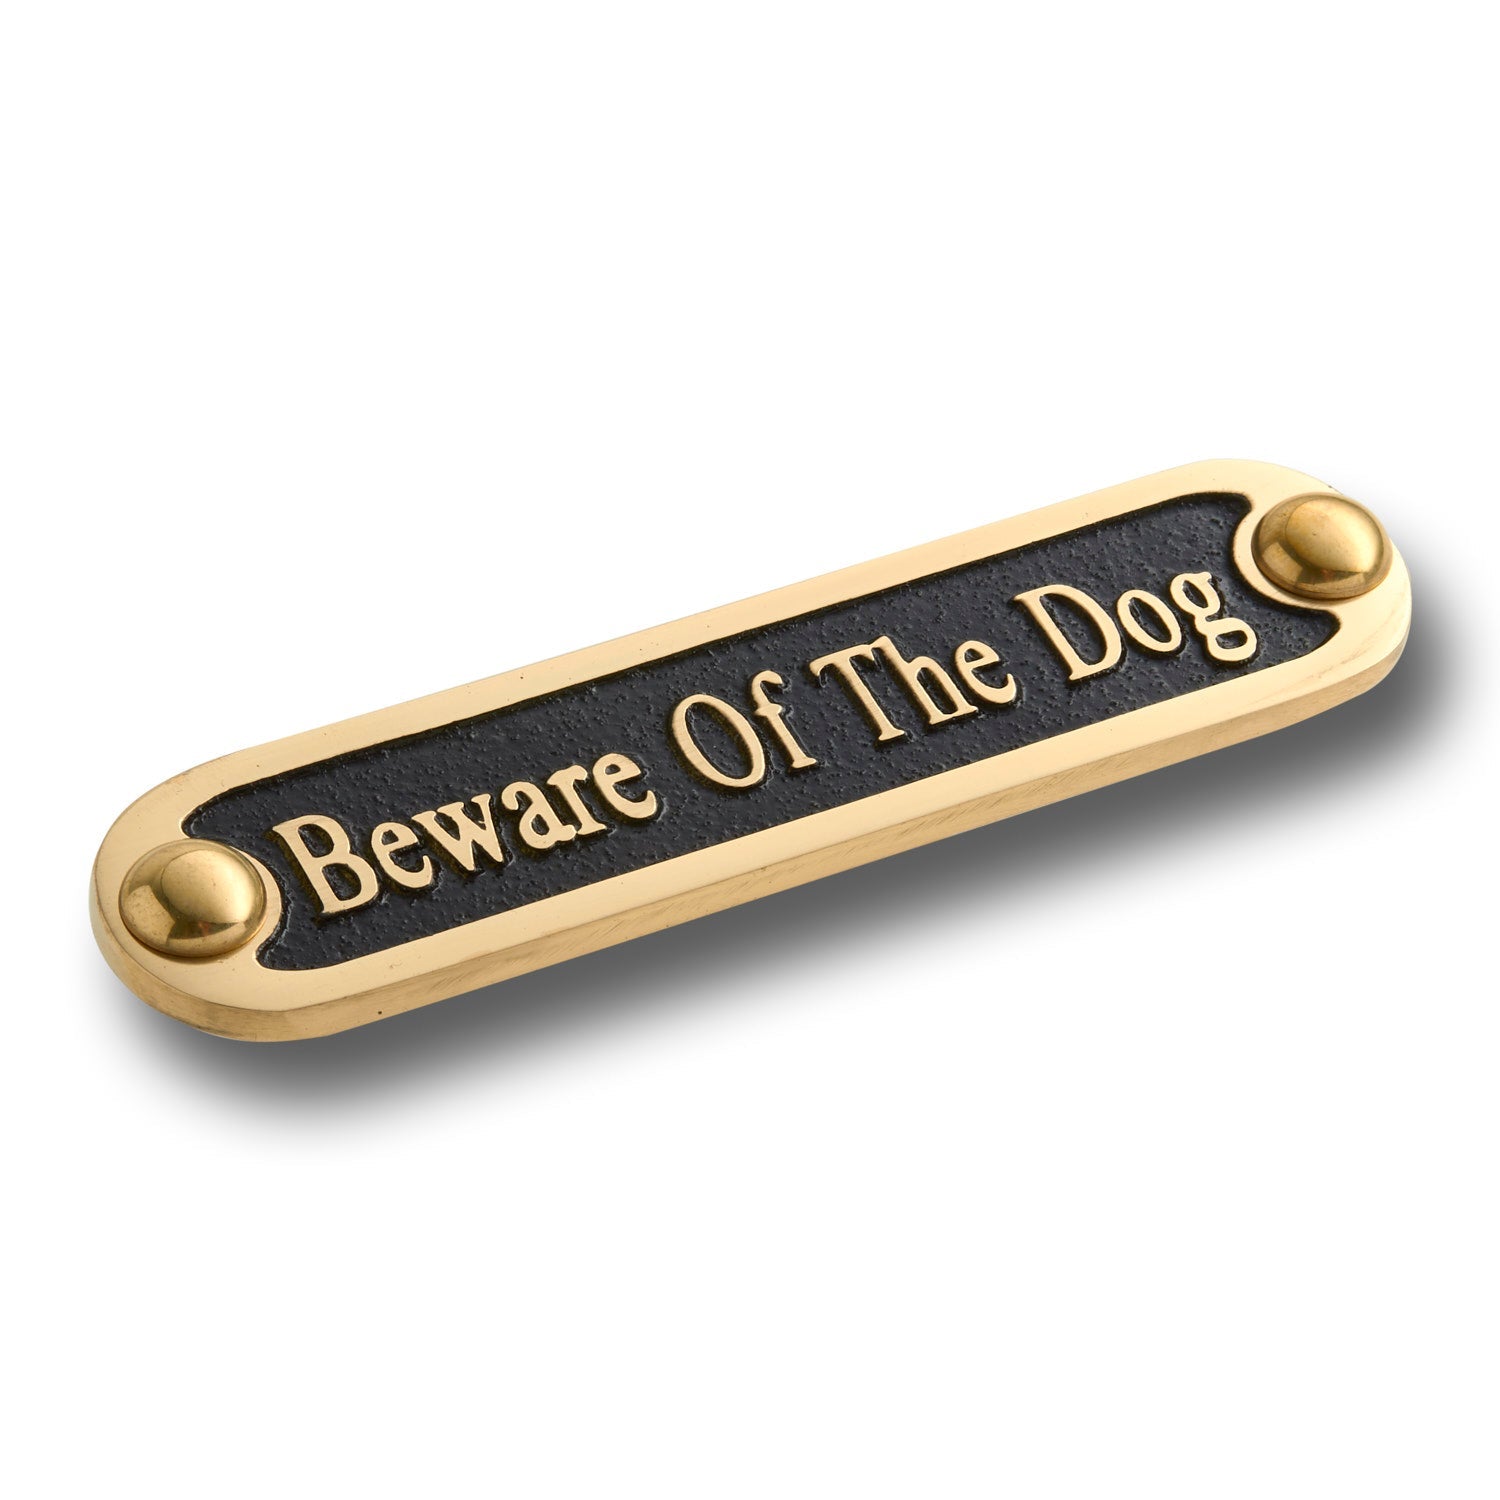 'Beware Of The Dog' Door Sign - The Metal Foundry